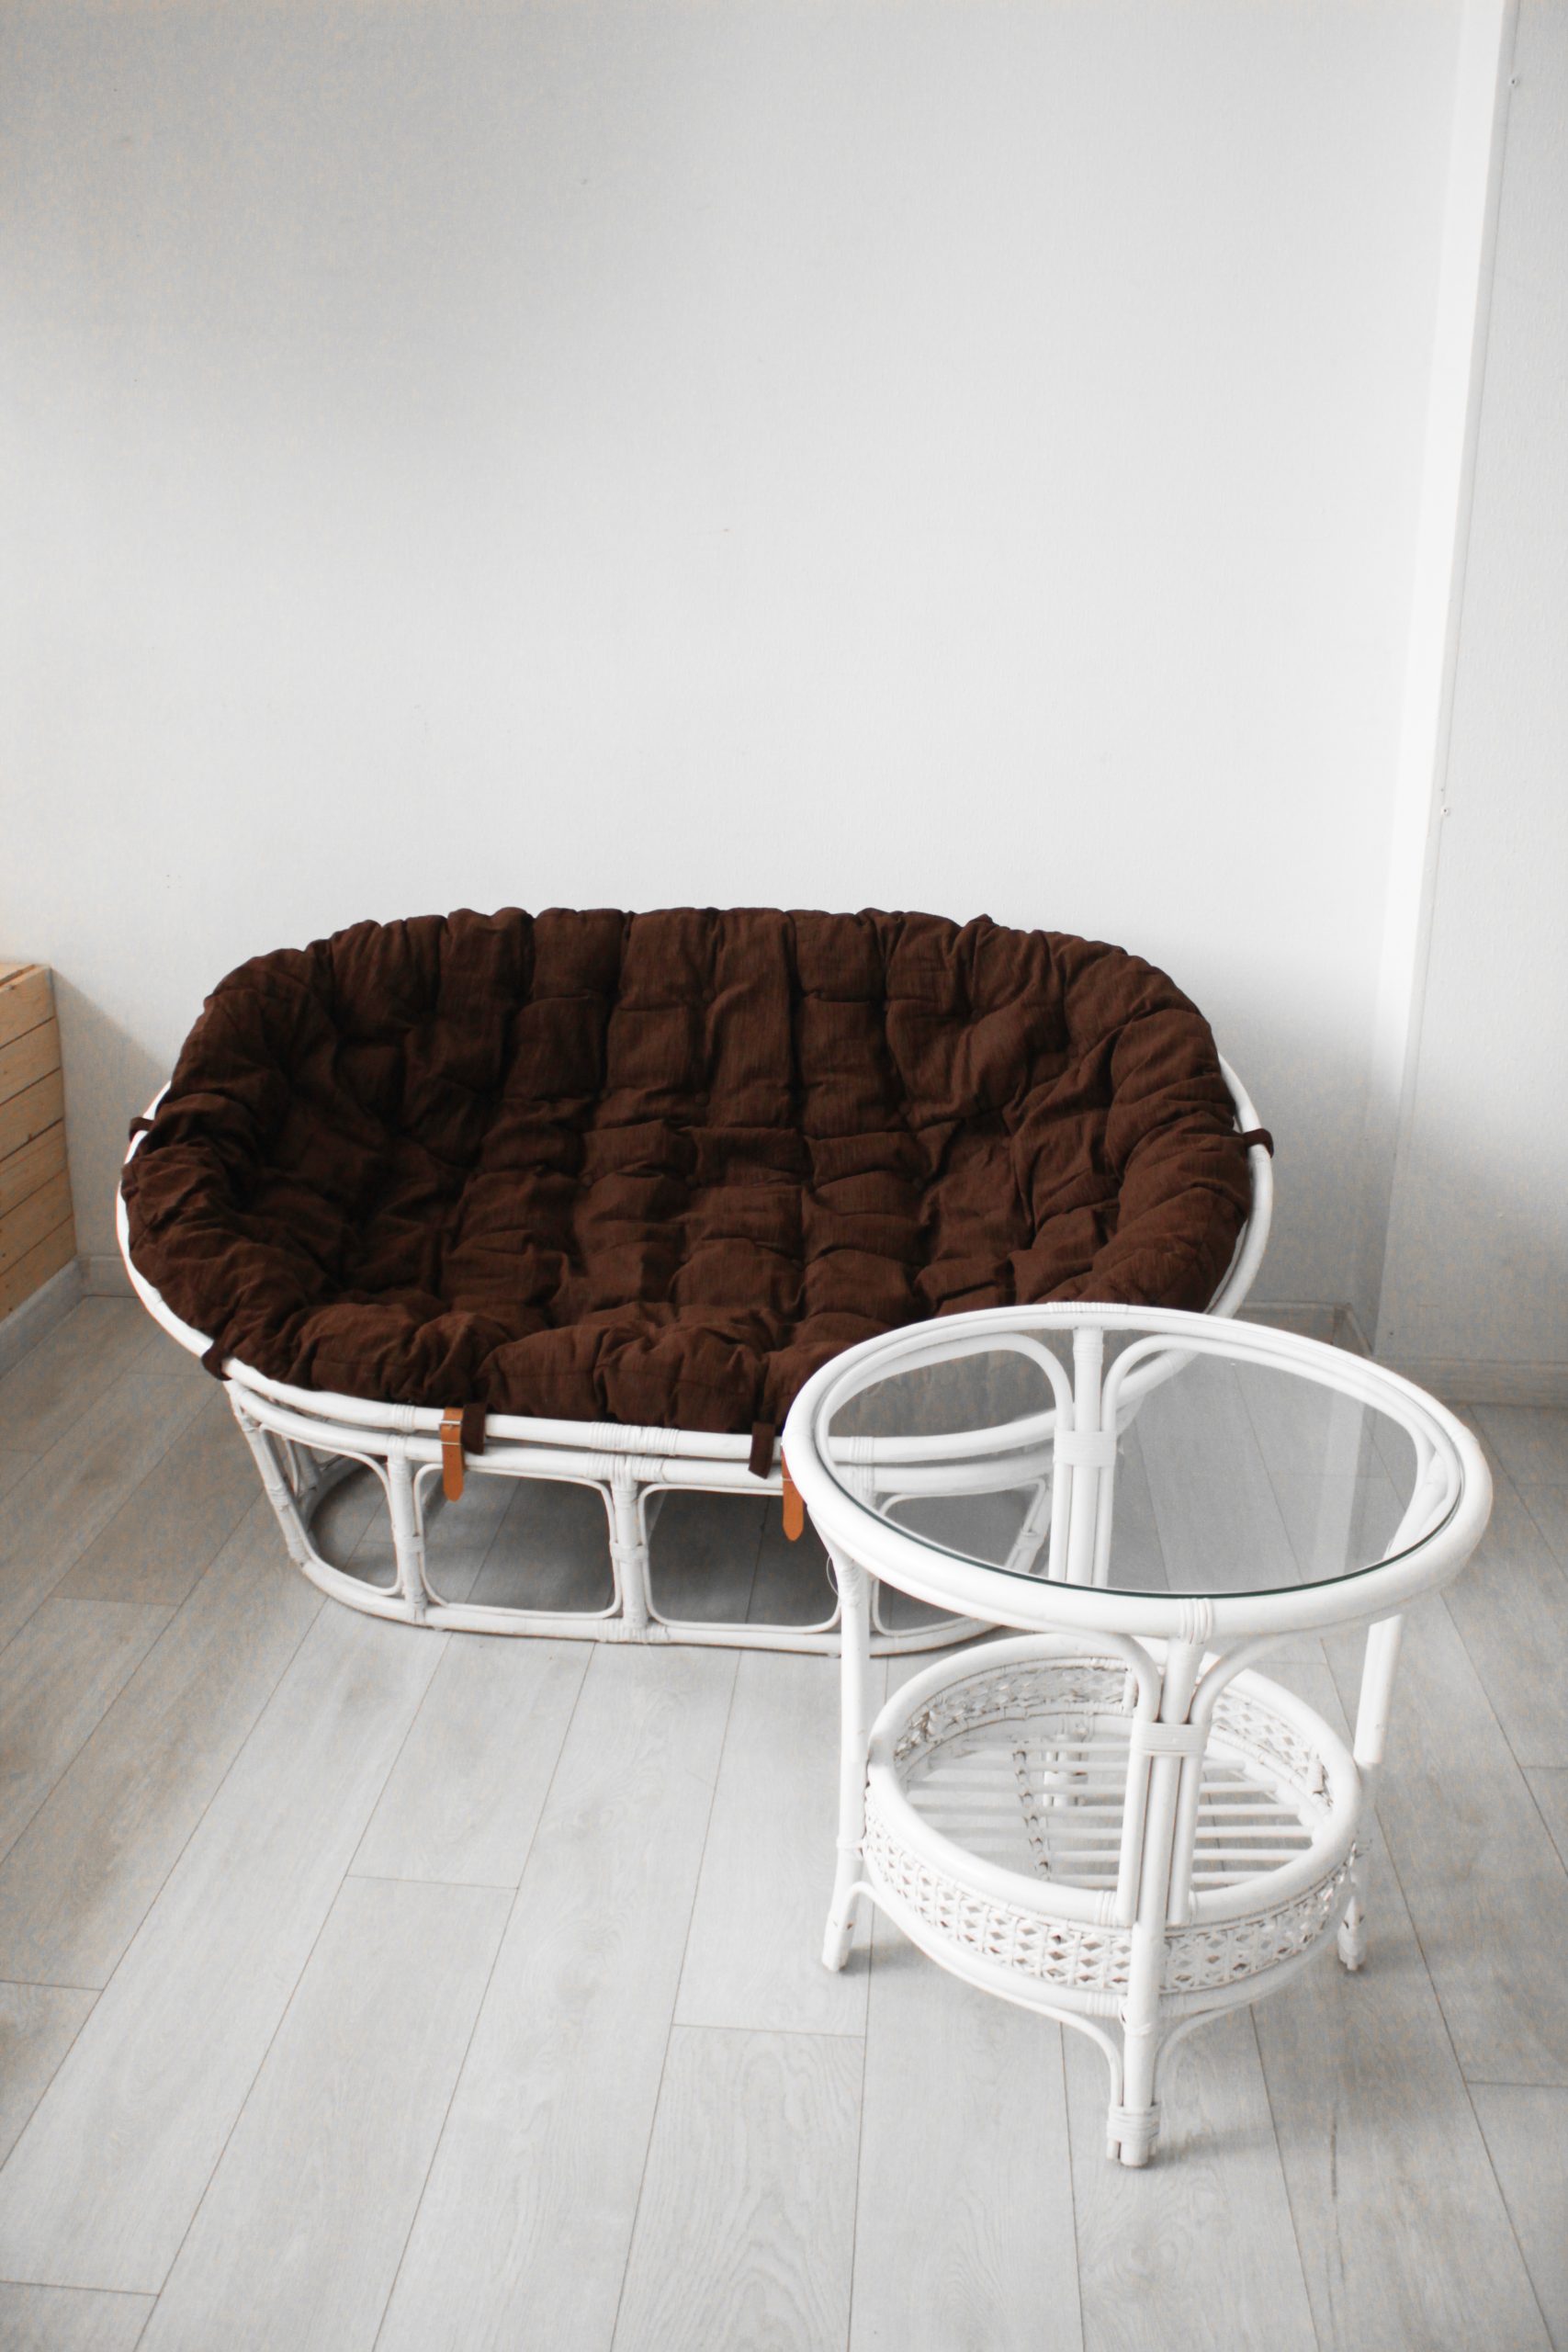 Подушка на диван Мамасан коричневая